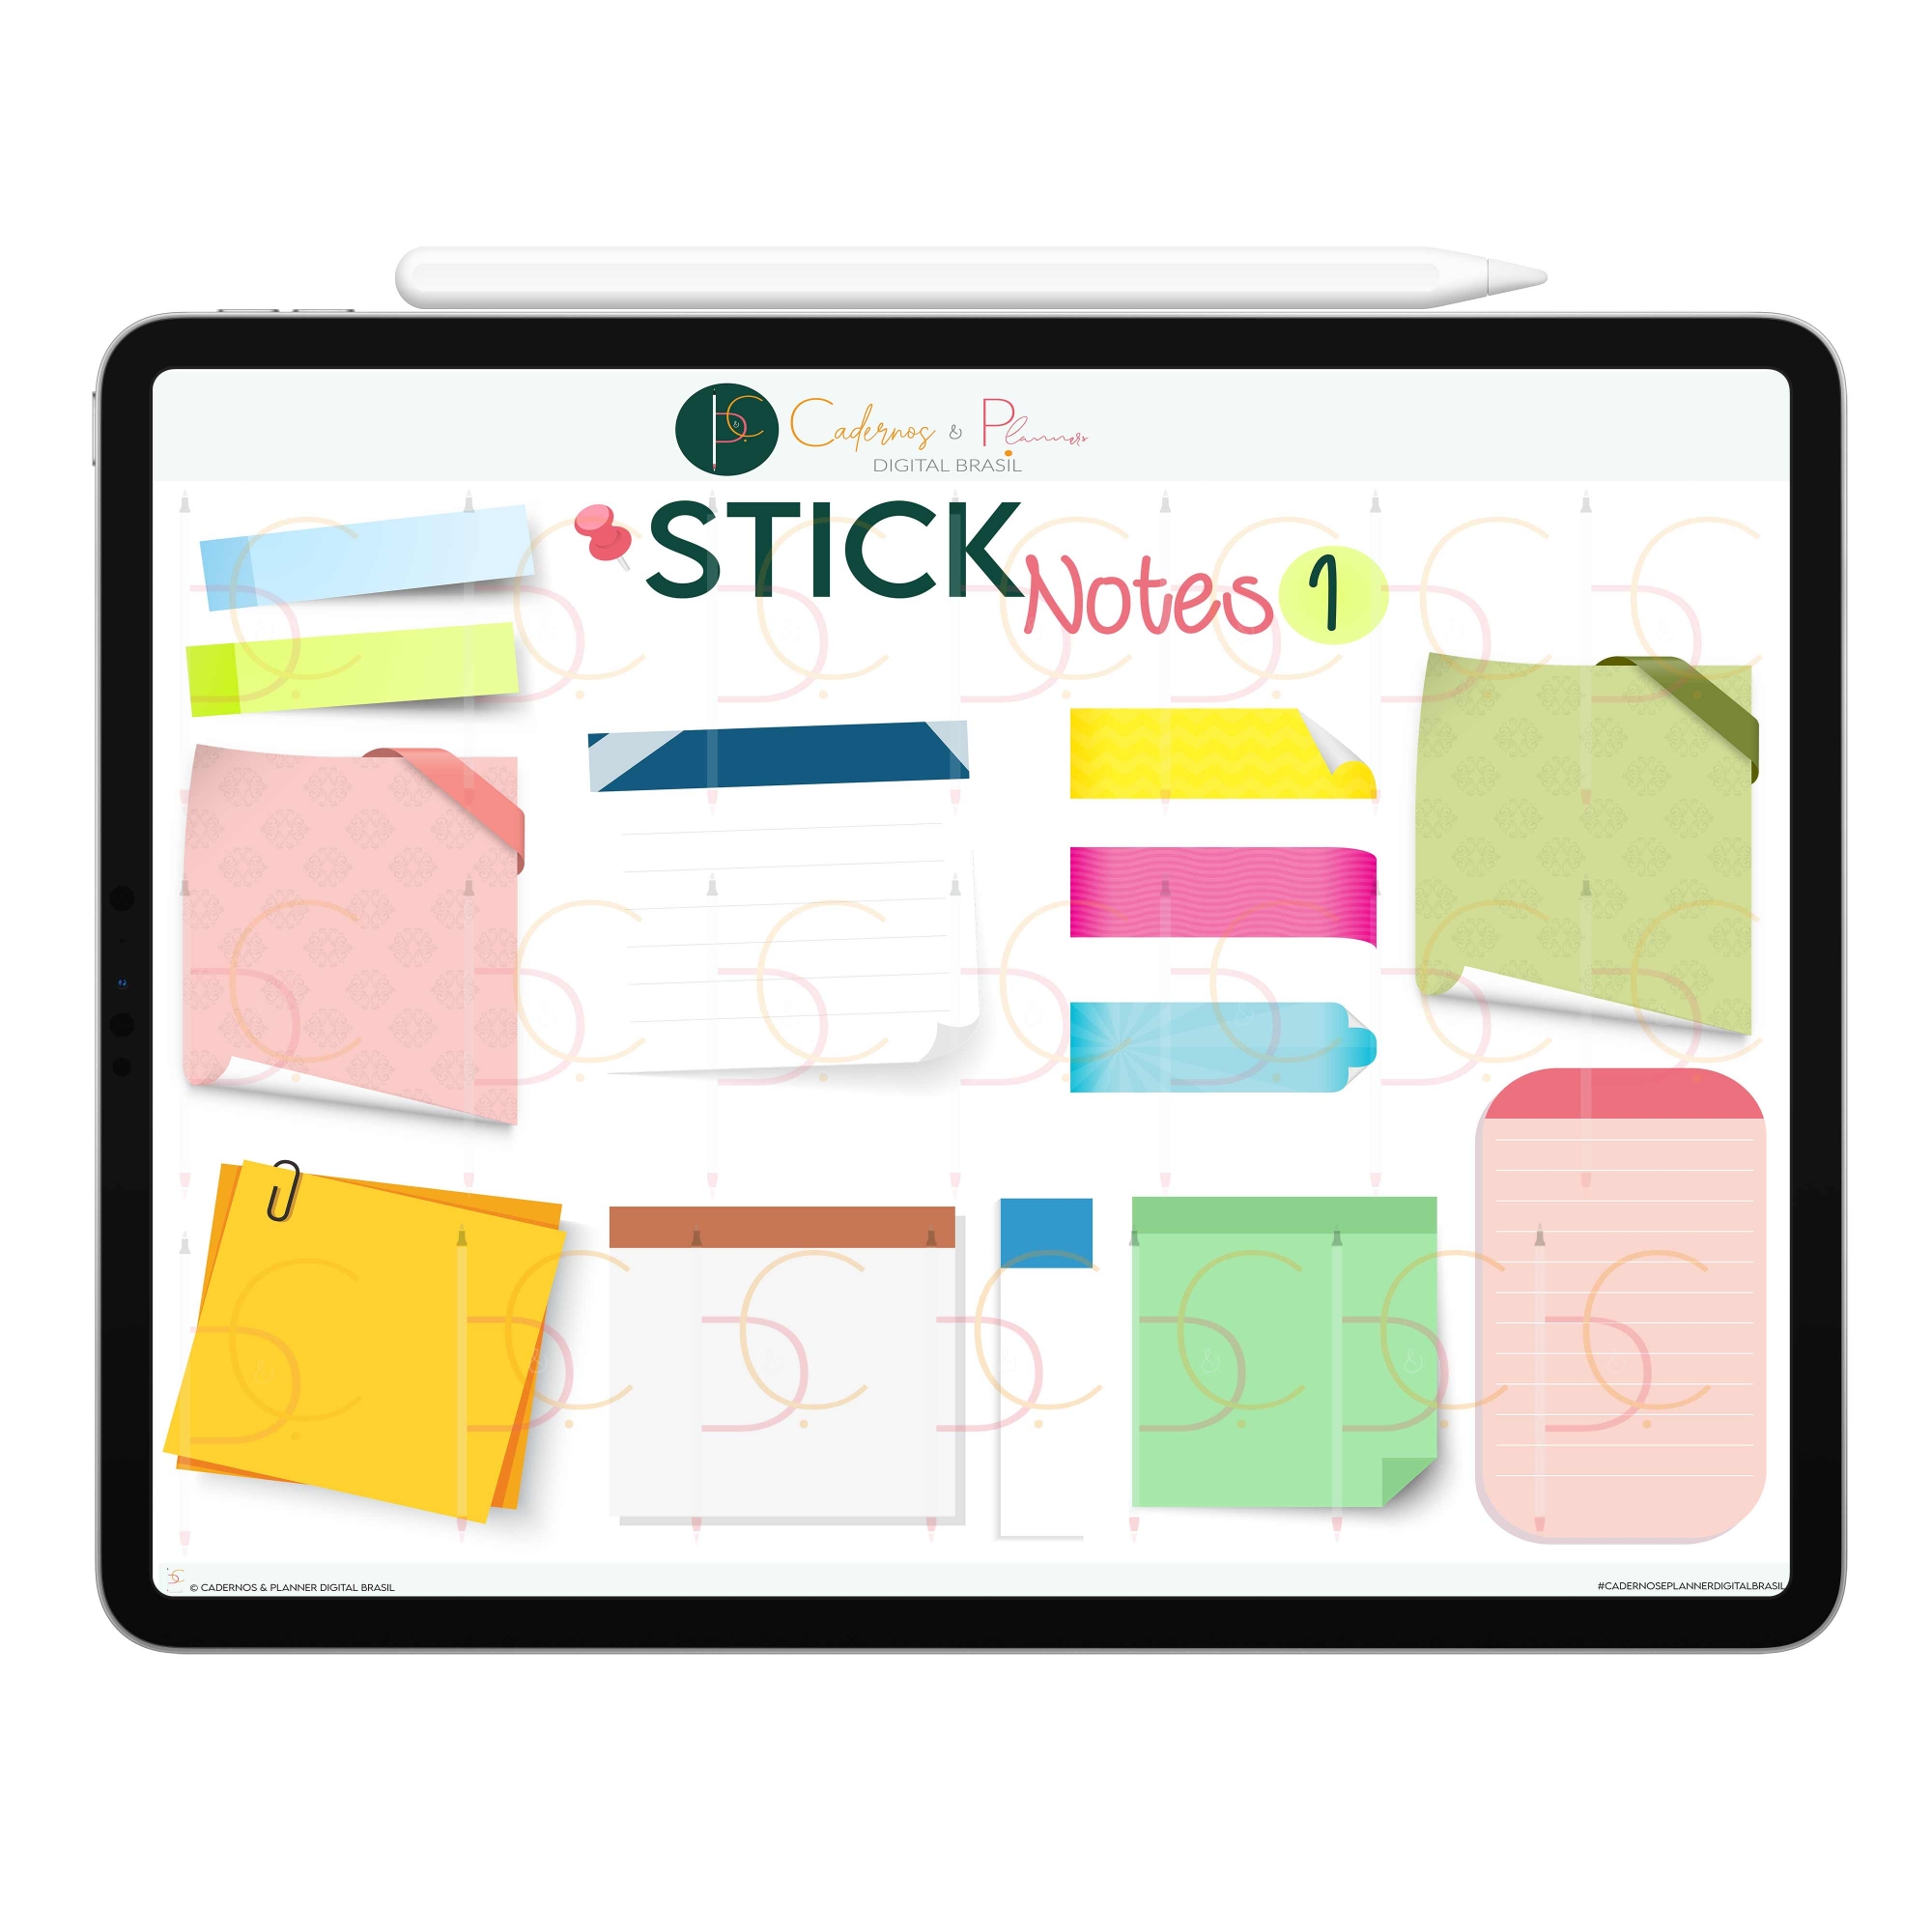 Stickers Adesivos Digital Stick Notes | Planejamento dos Estudos | Study Notes | Planner Digital, Caderno Digital | iPad ' Tablet | GoodNotes ' Noteshelf